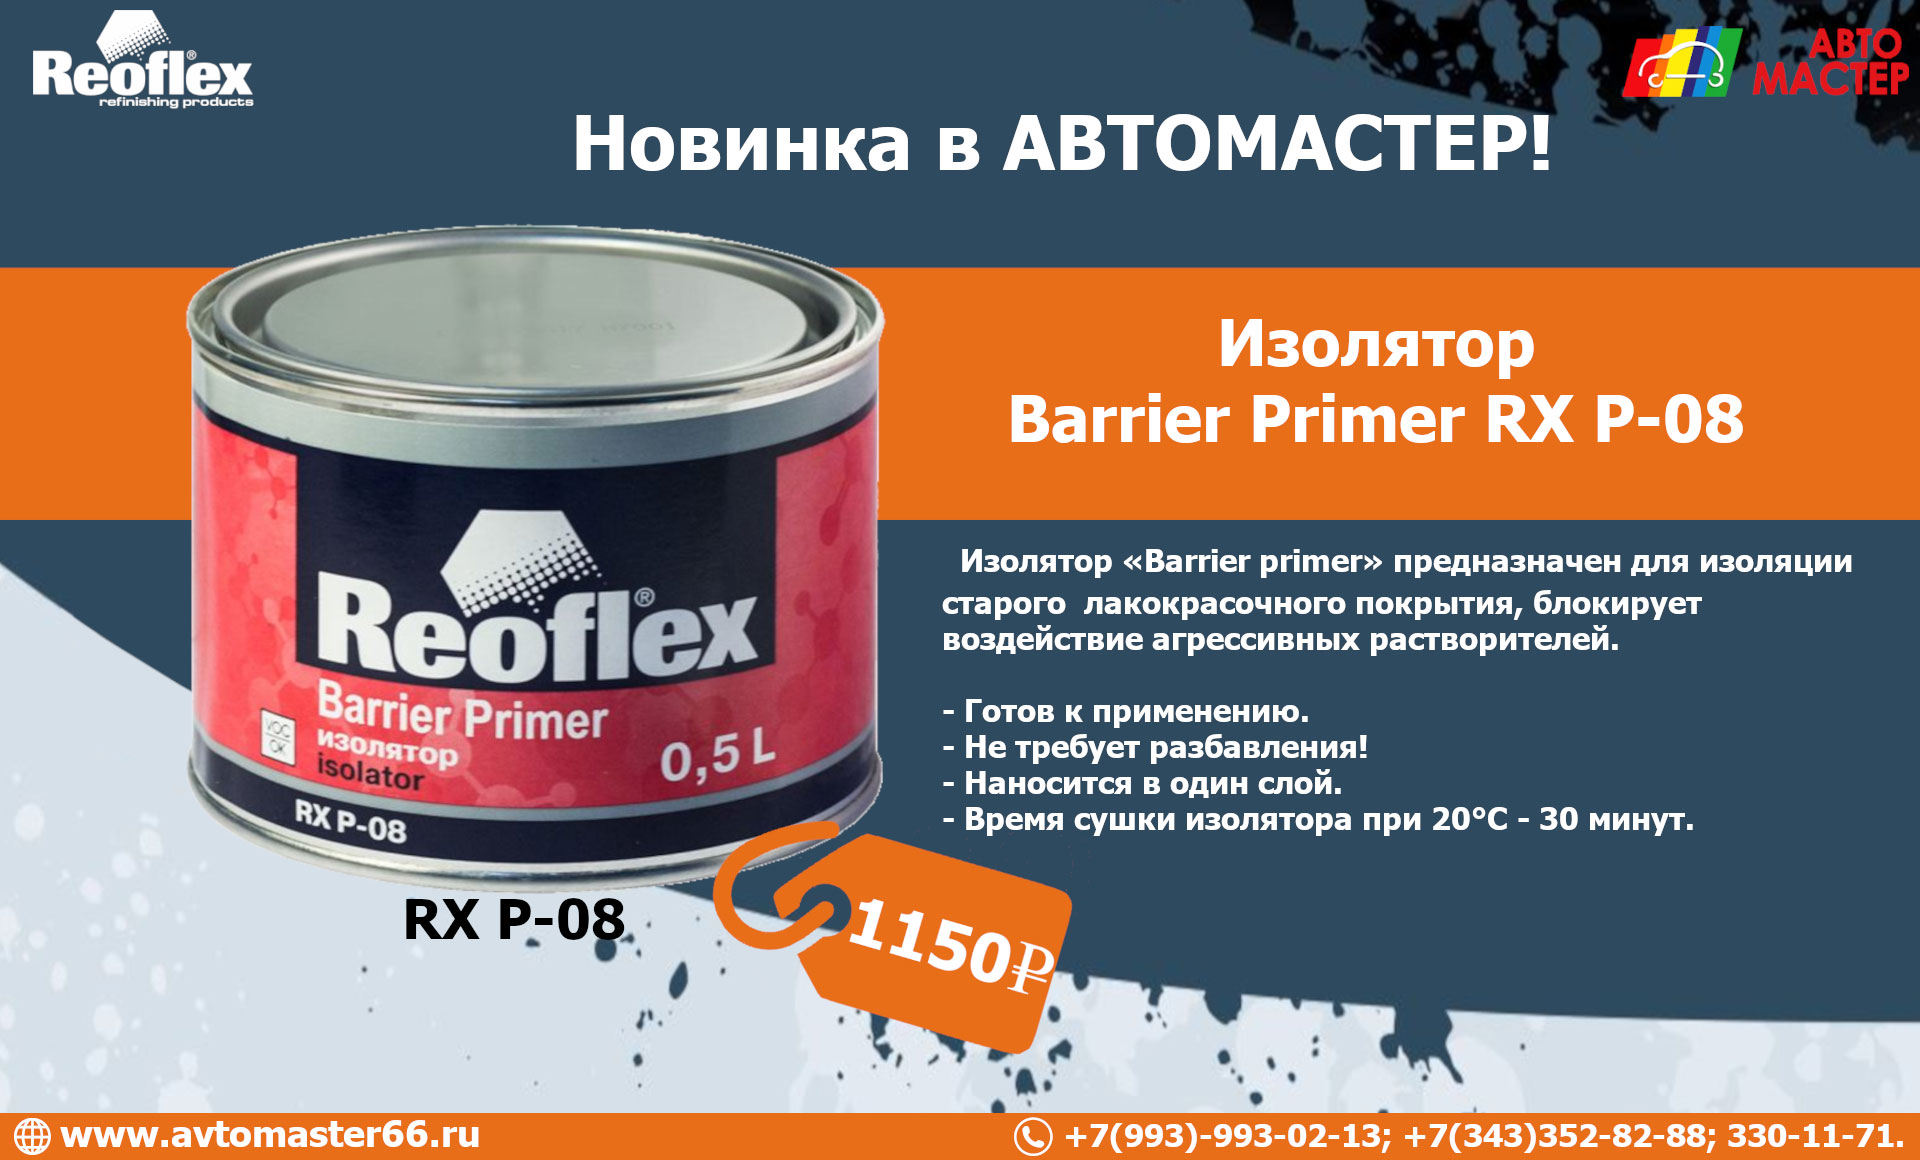 Изолятор Reoflex Barrier Primer RX P-08